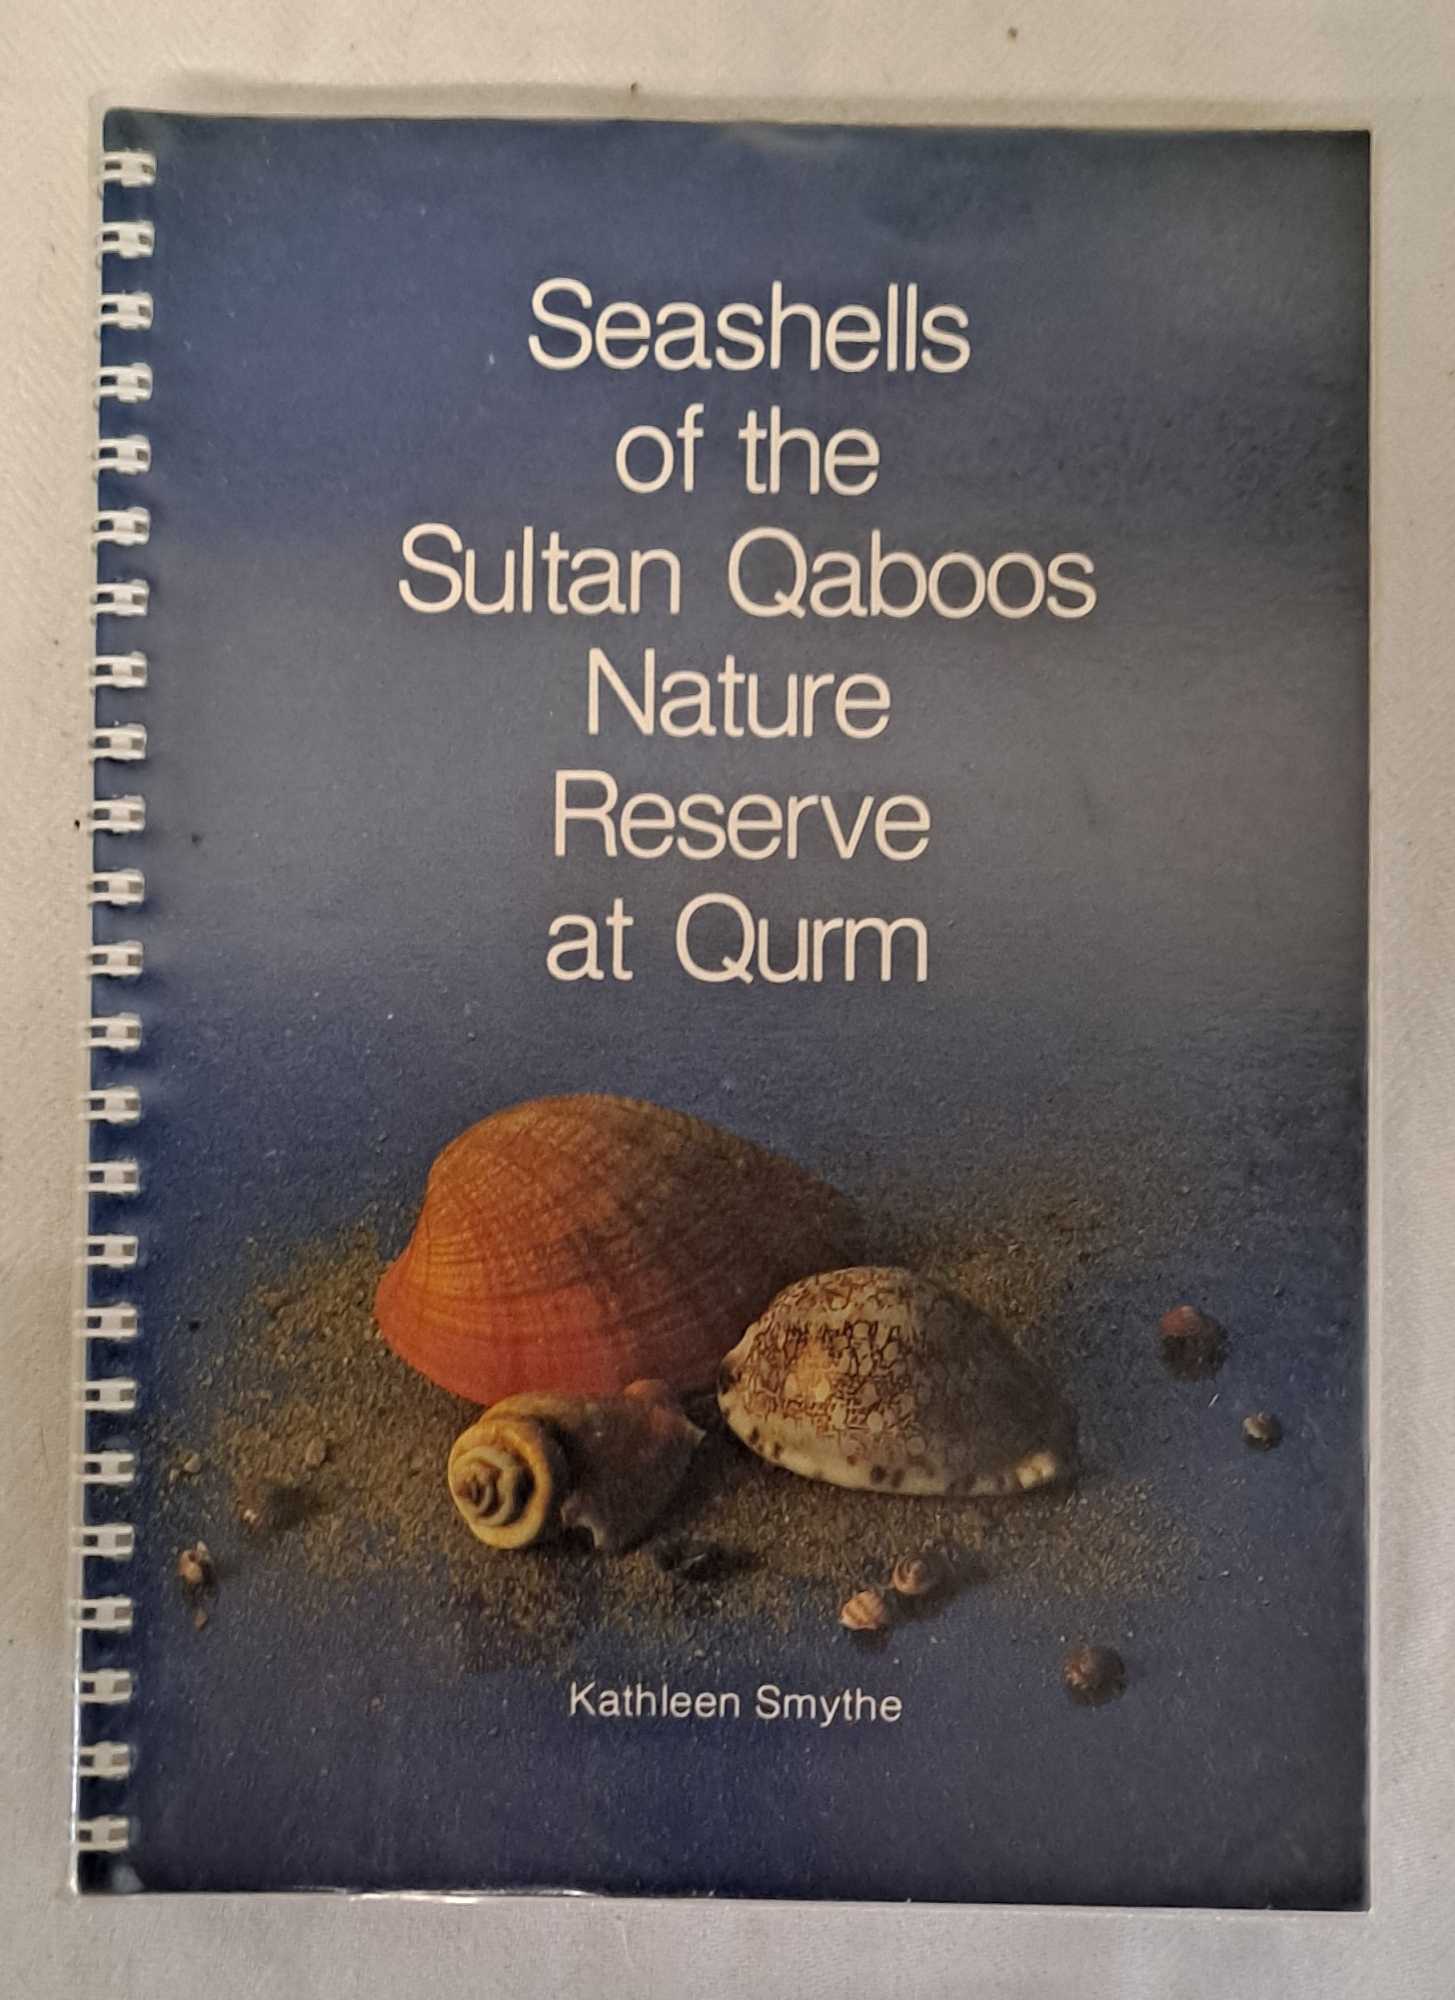 Kathleen Smythe - Seashells of the Sultan Qaboos Nature Reserve at Qurm